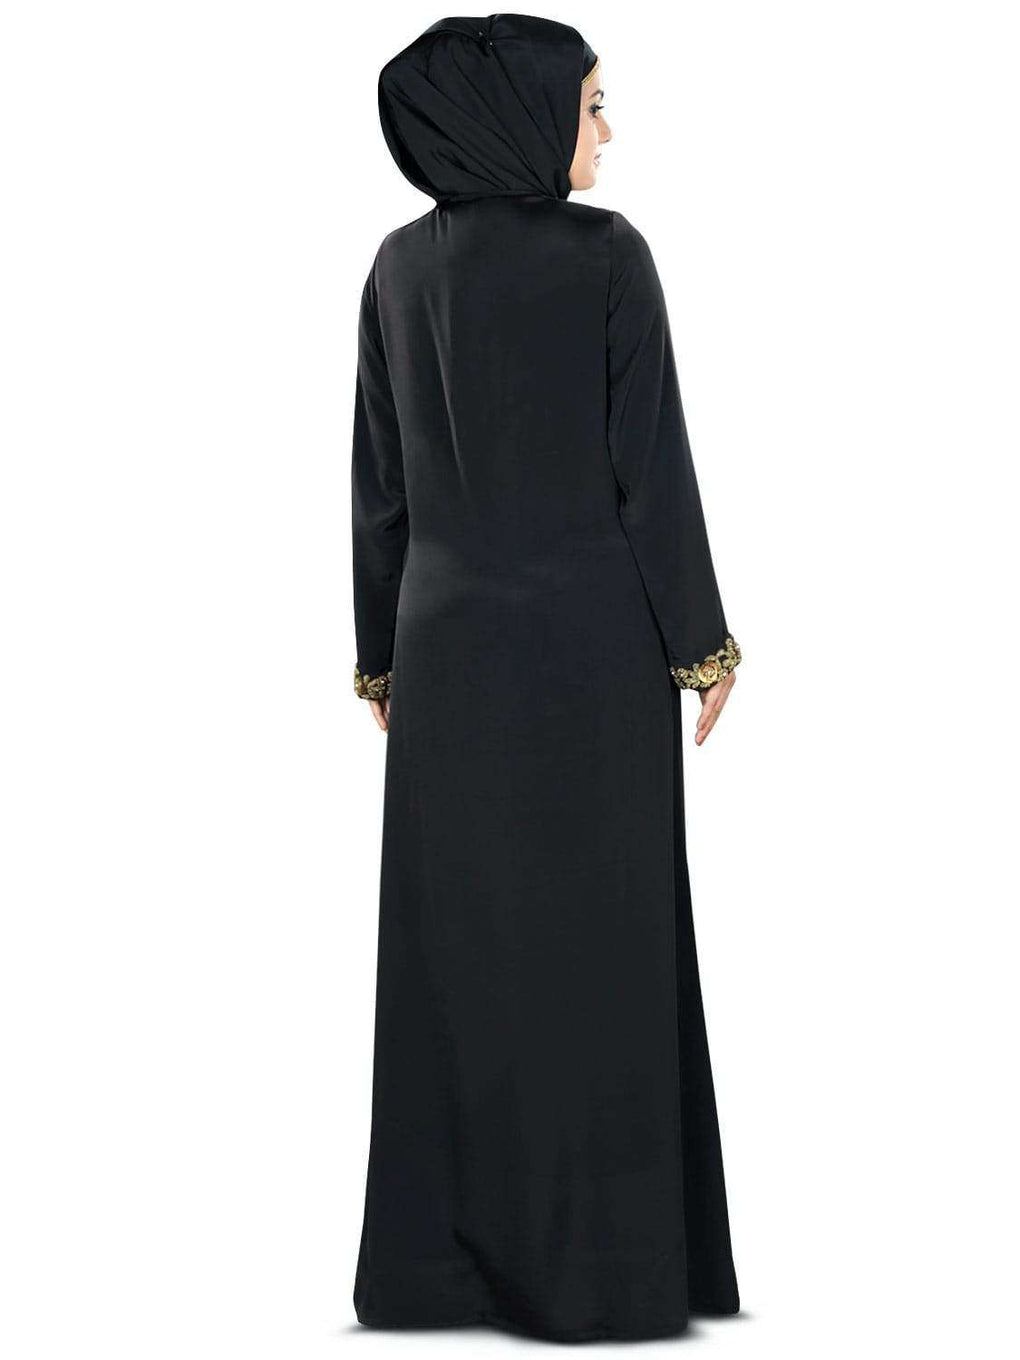 Fiddah Gold Hand Embroidered Burqa Side